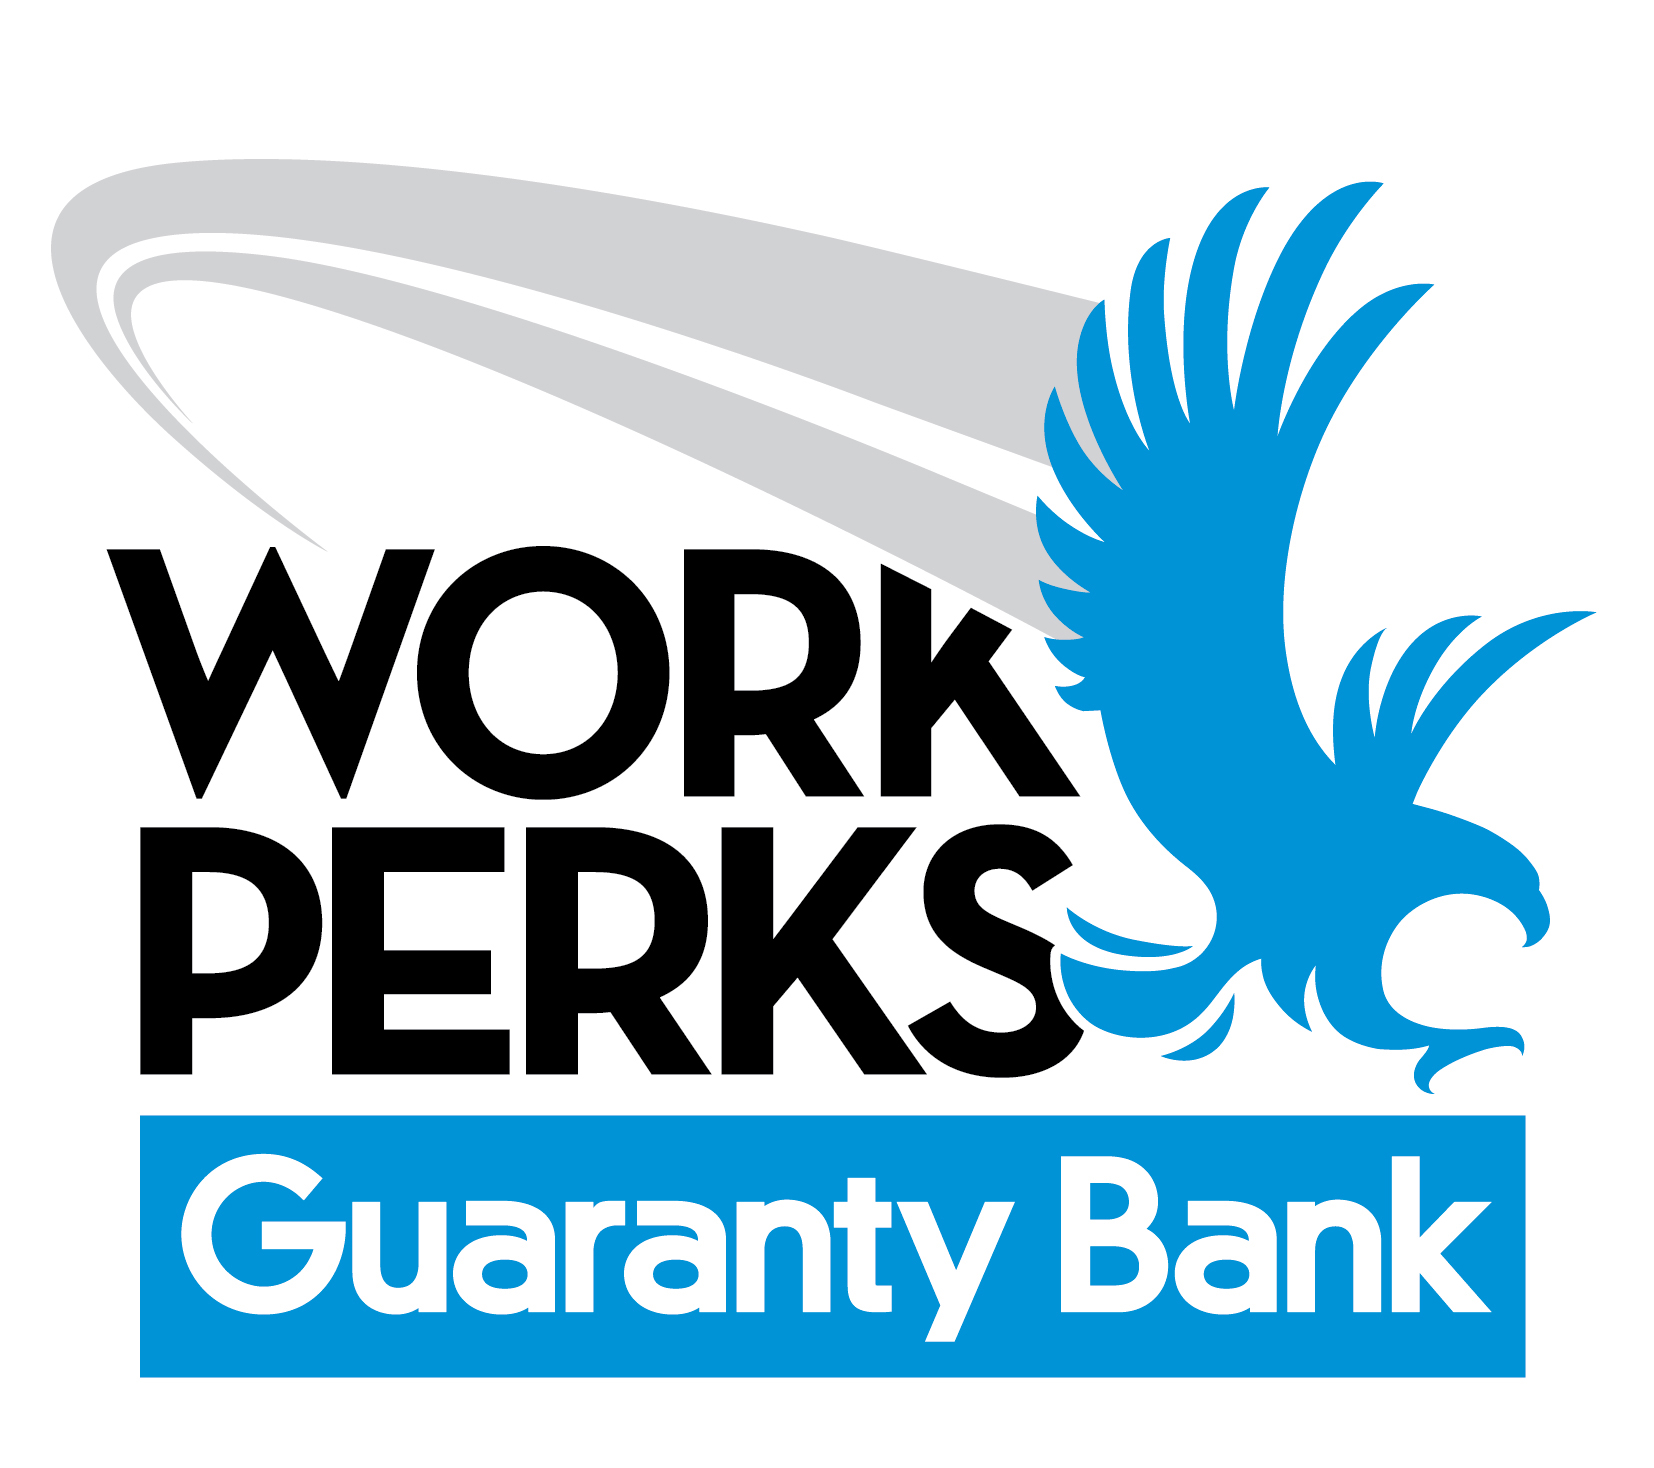 Work perks logo blue